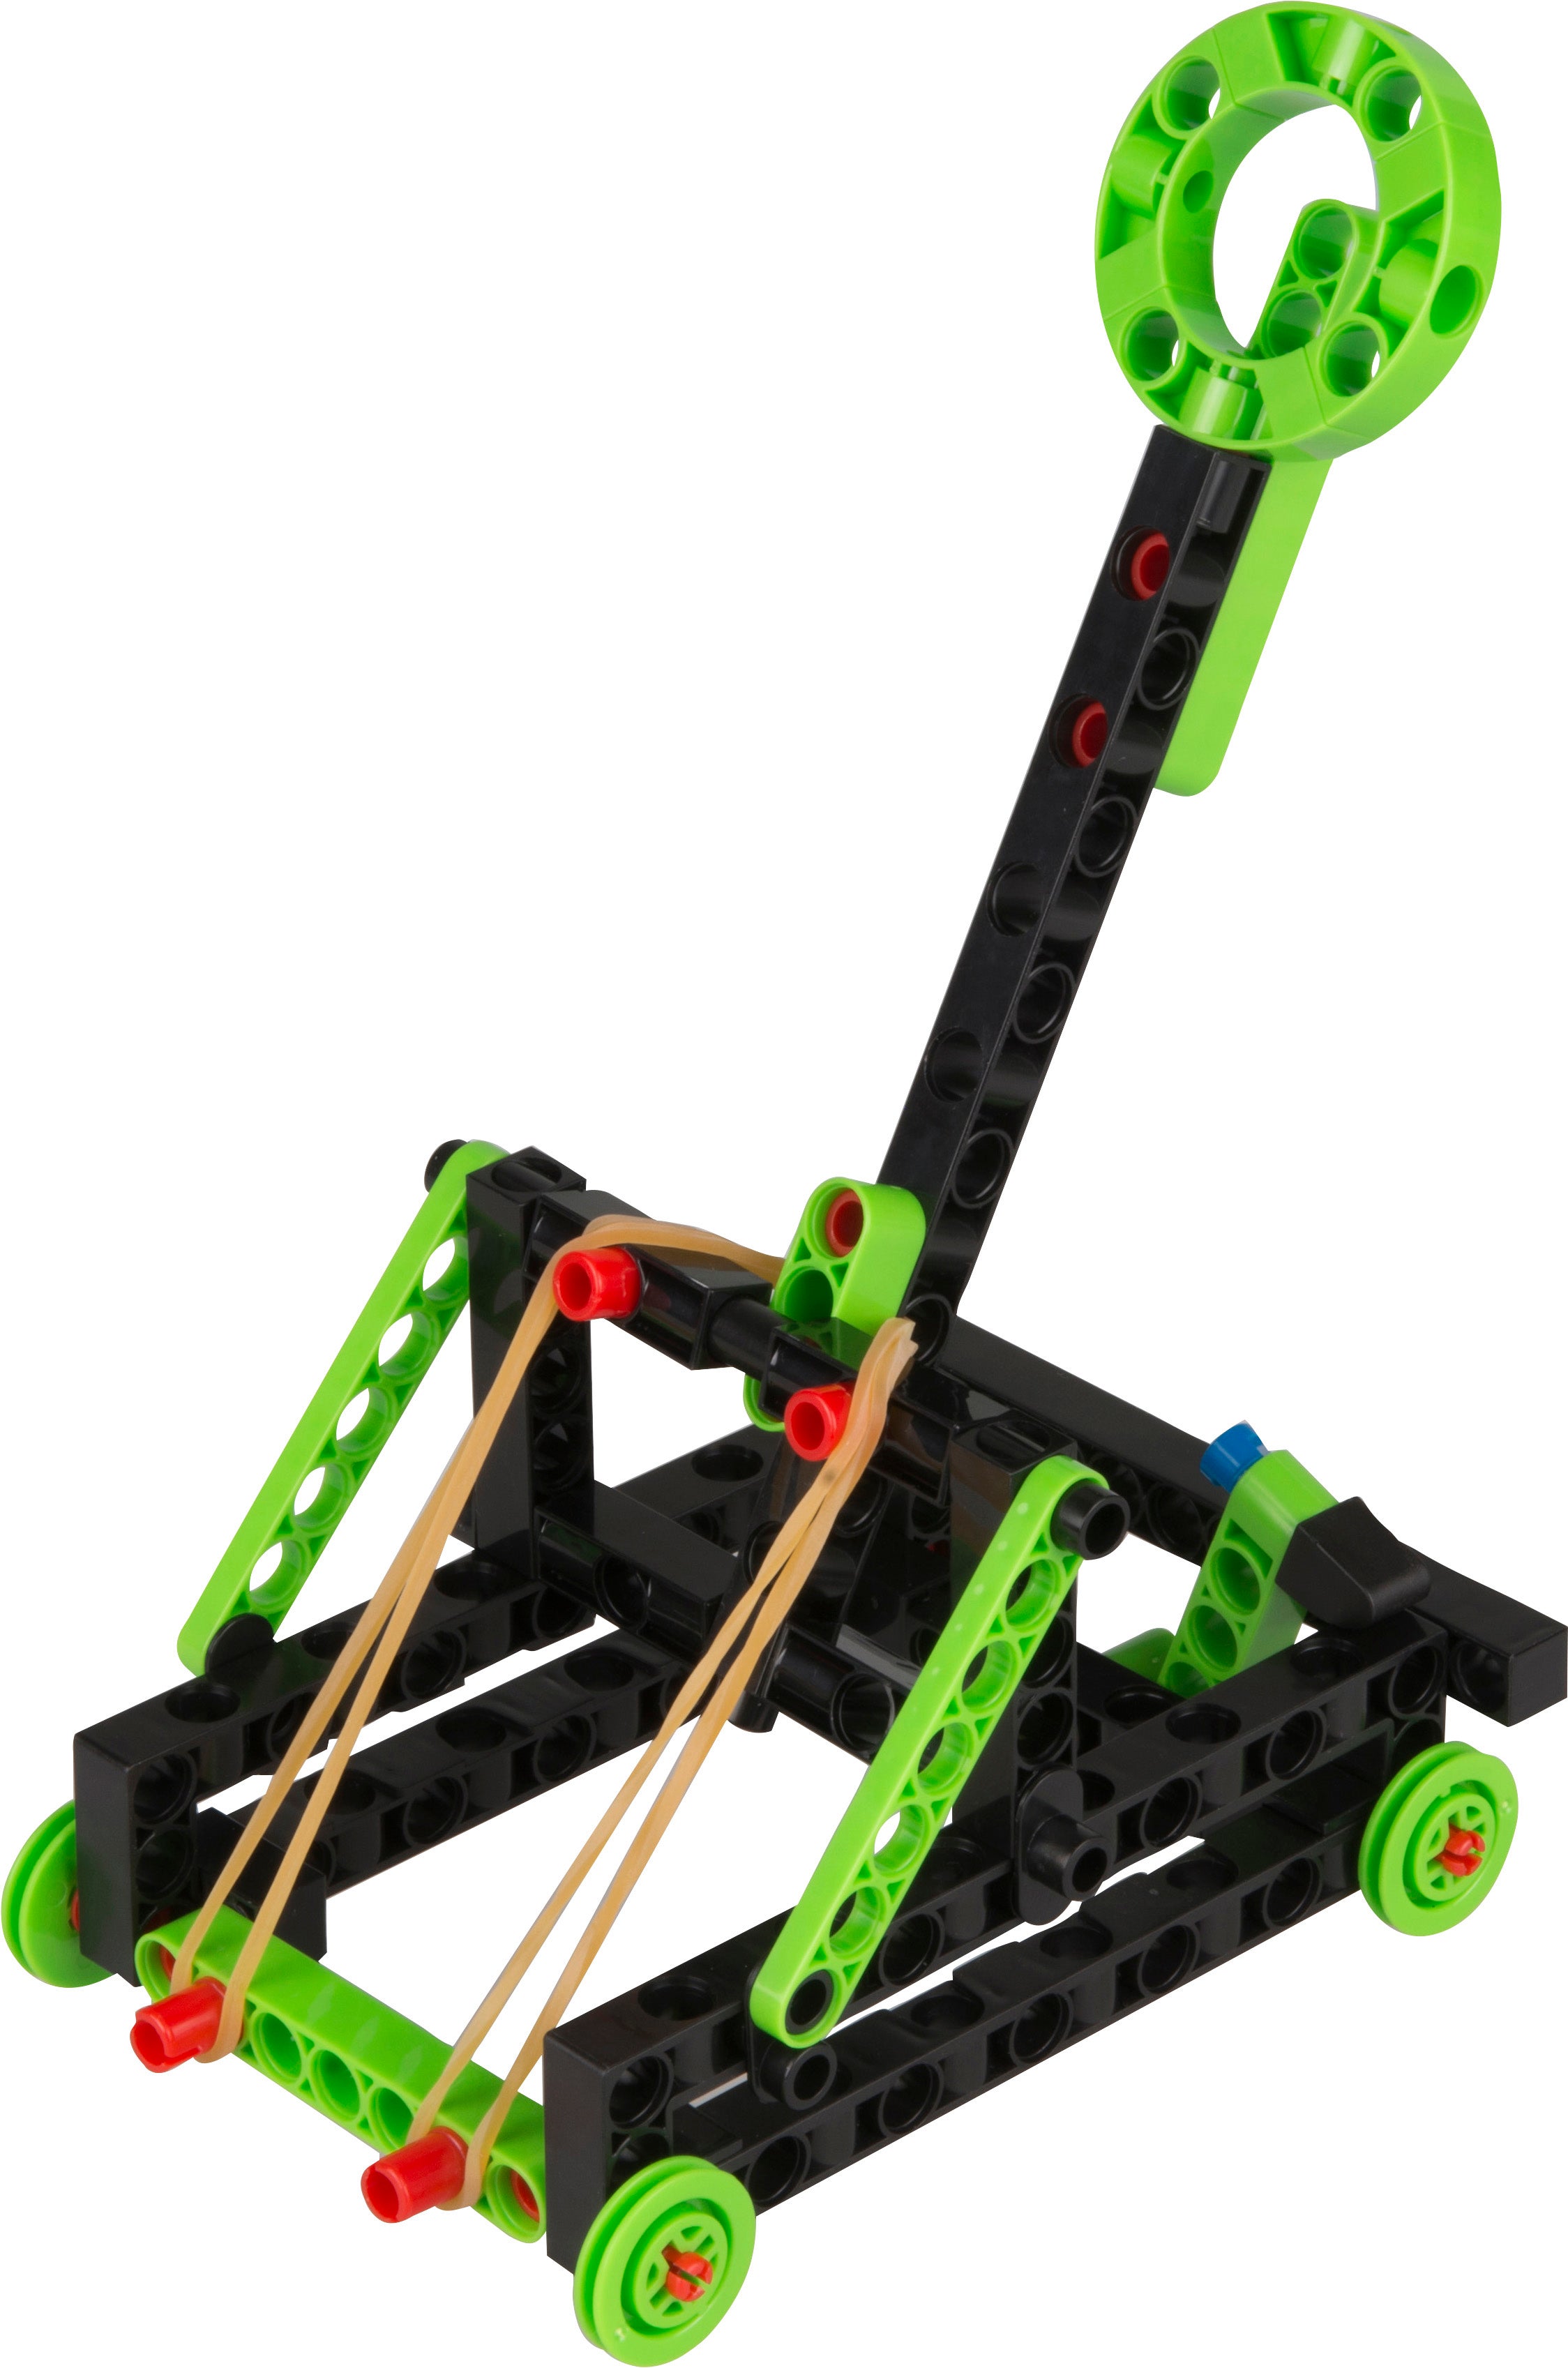 Catapults & Crossbows - Build 10 Models    